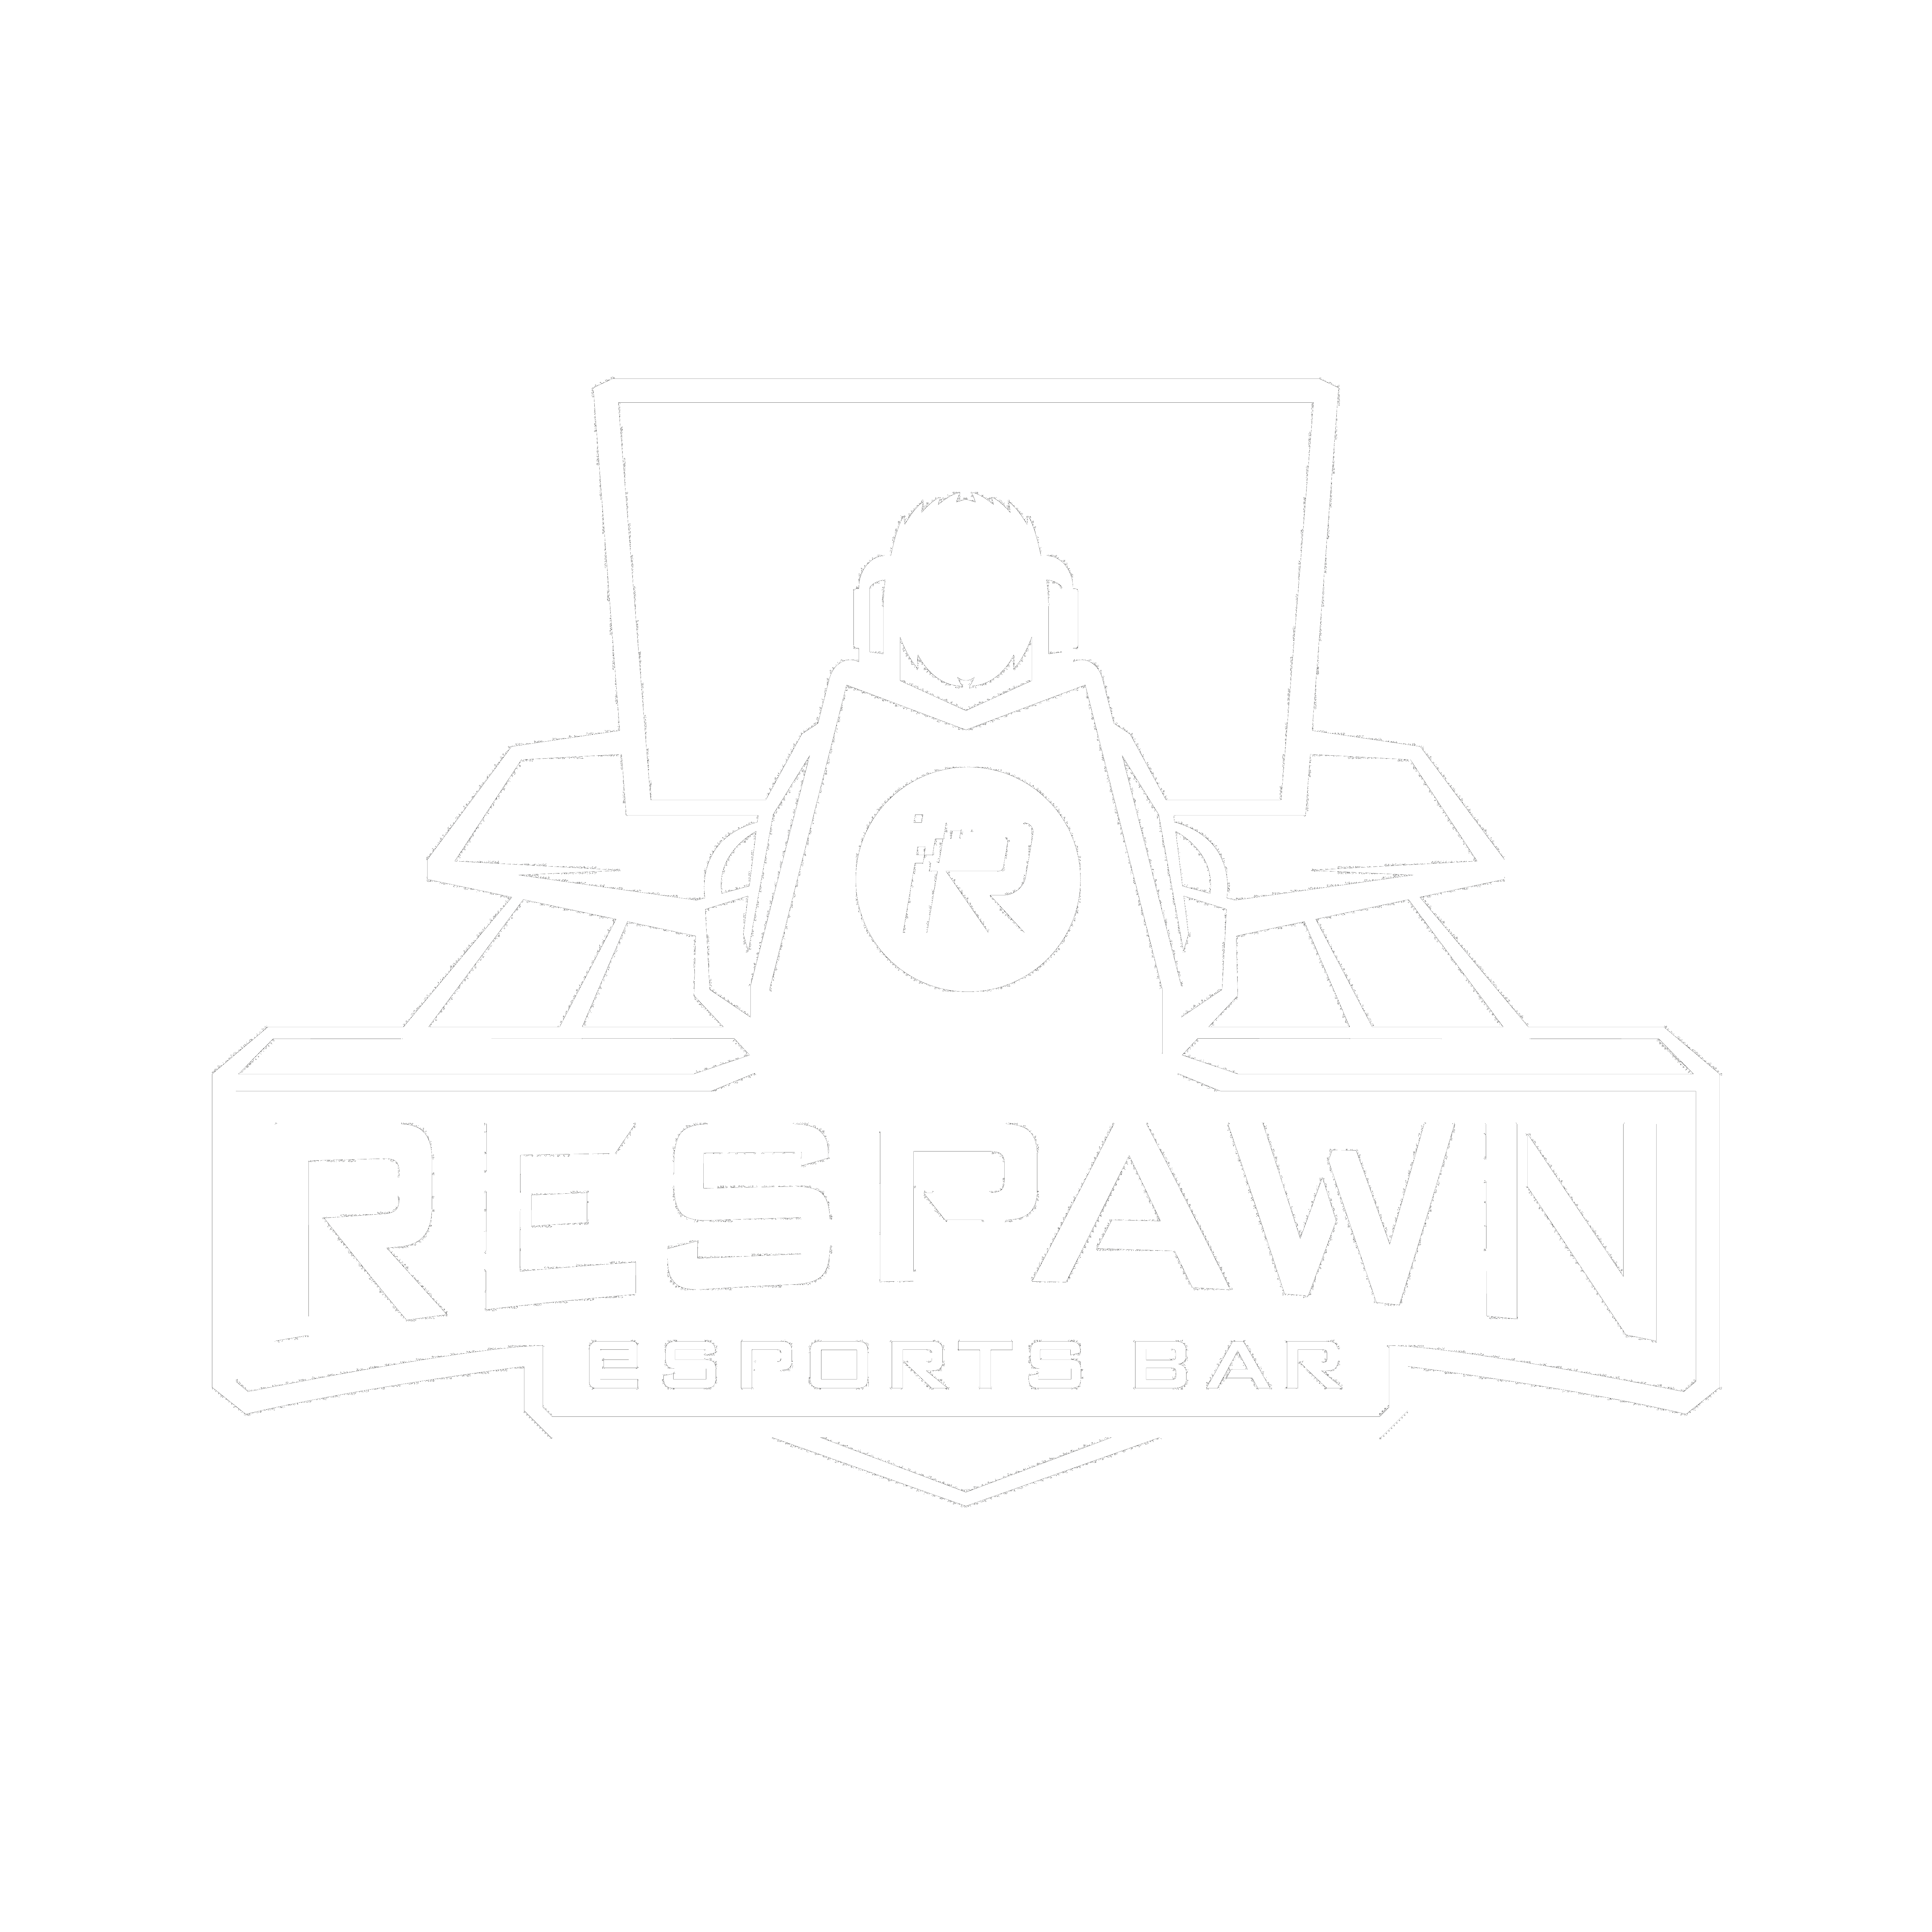 Respawn